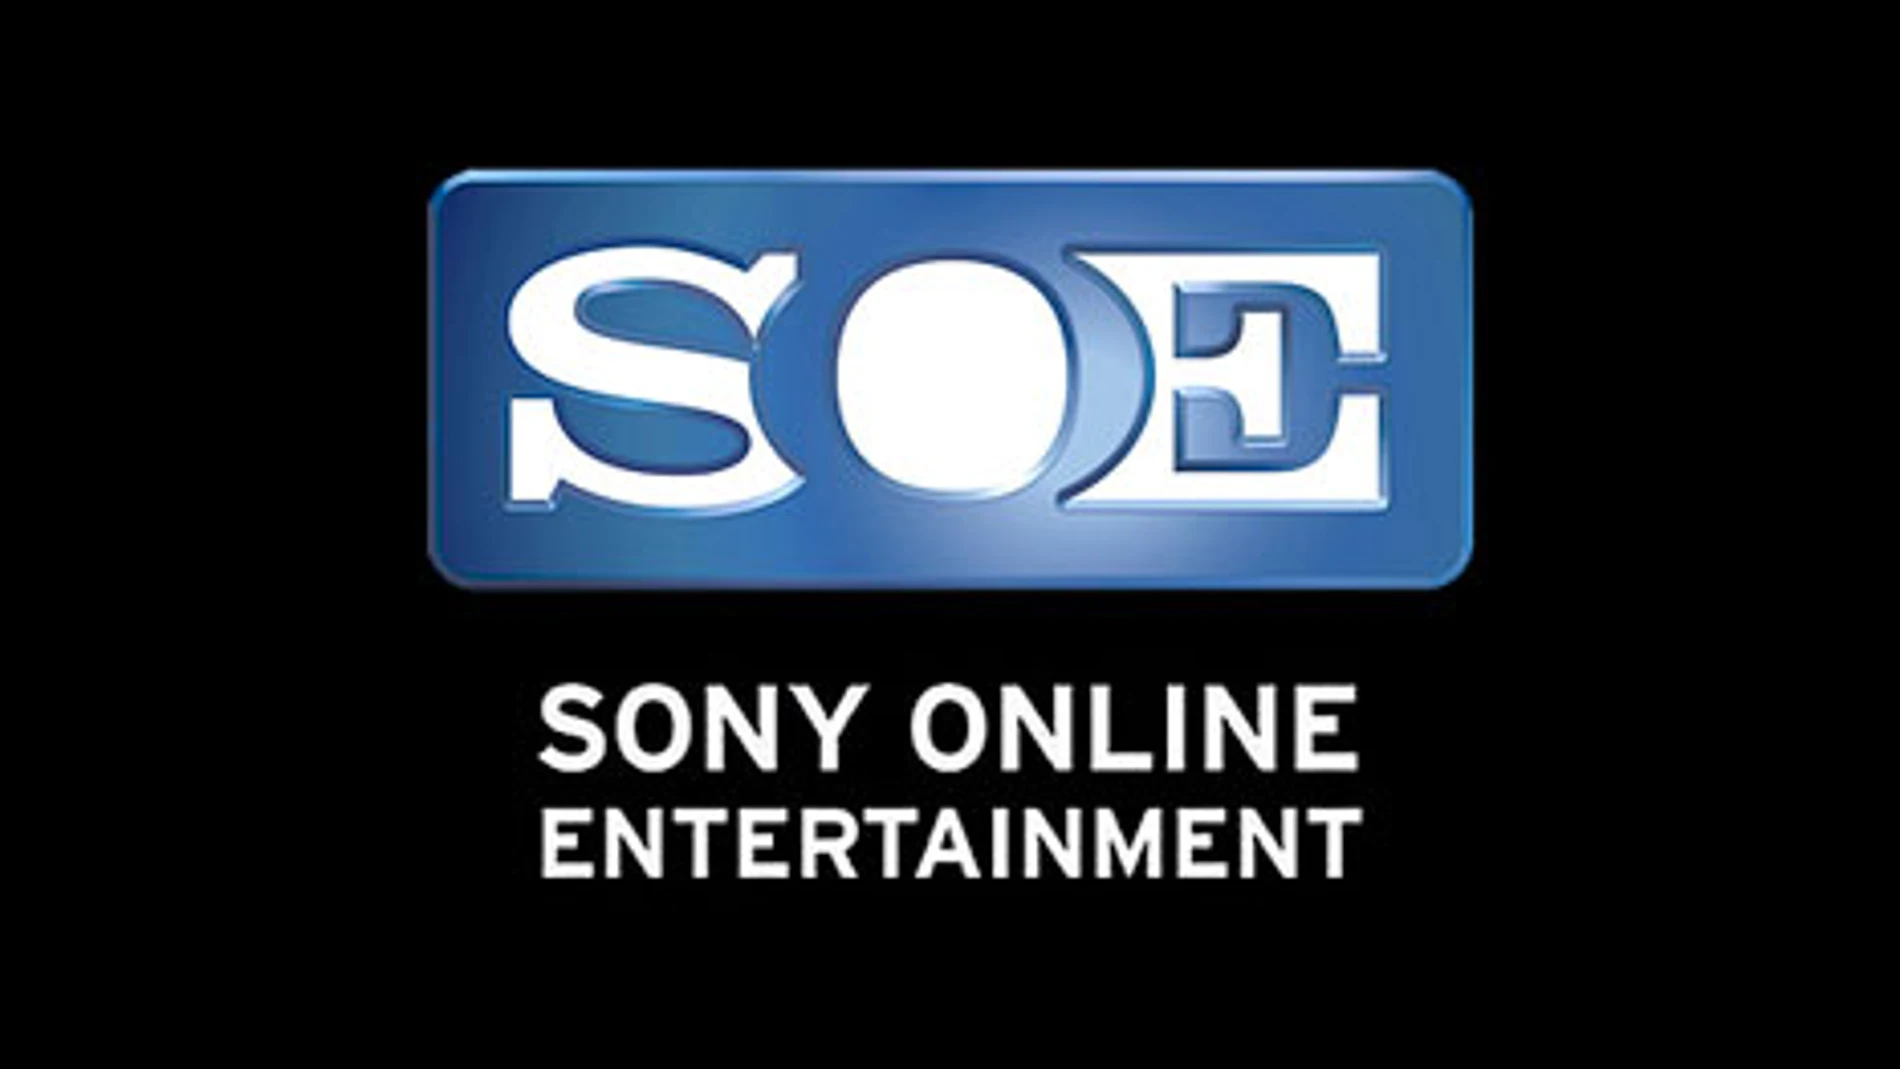 Columbus Nova compra Sony Online Entertainment, que desarrollará multiplataformas